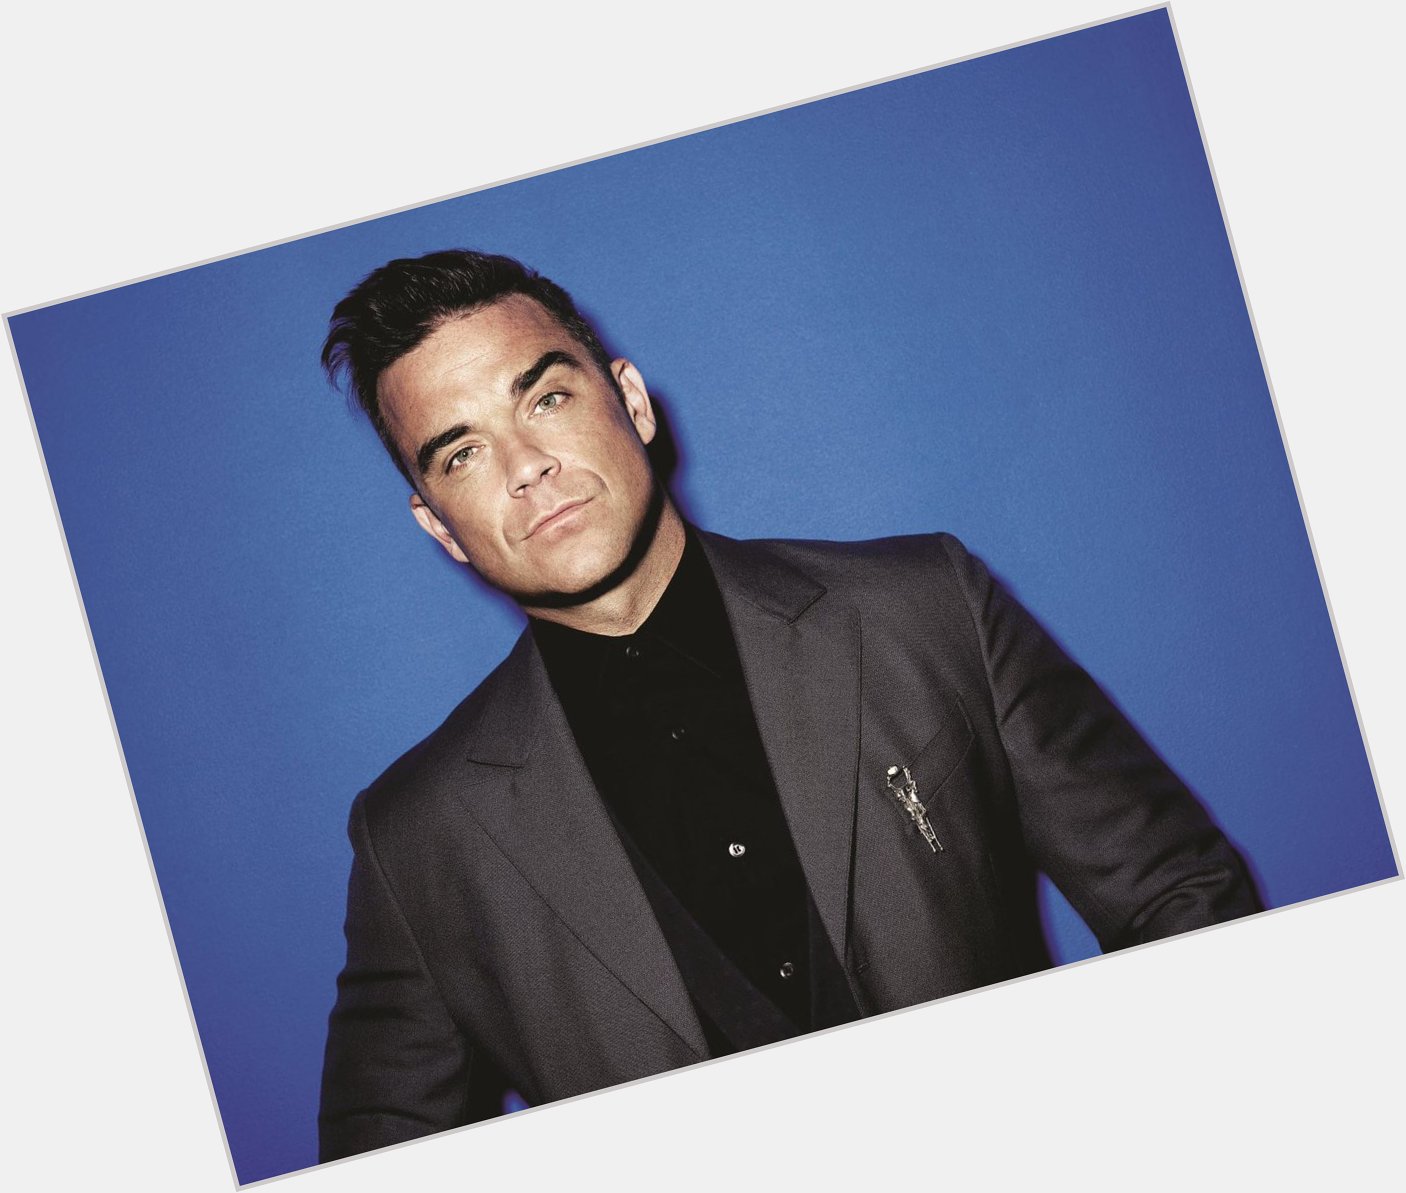 Happy birthday to Robbie Williams! 